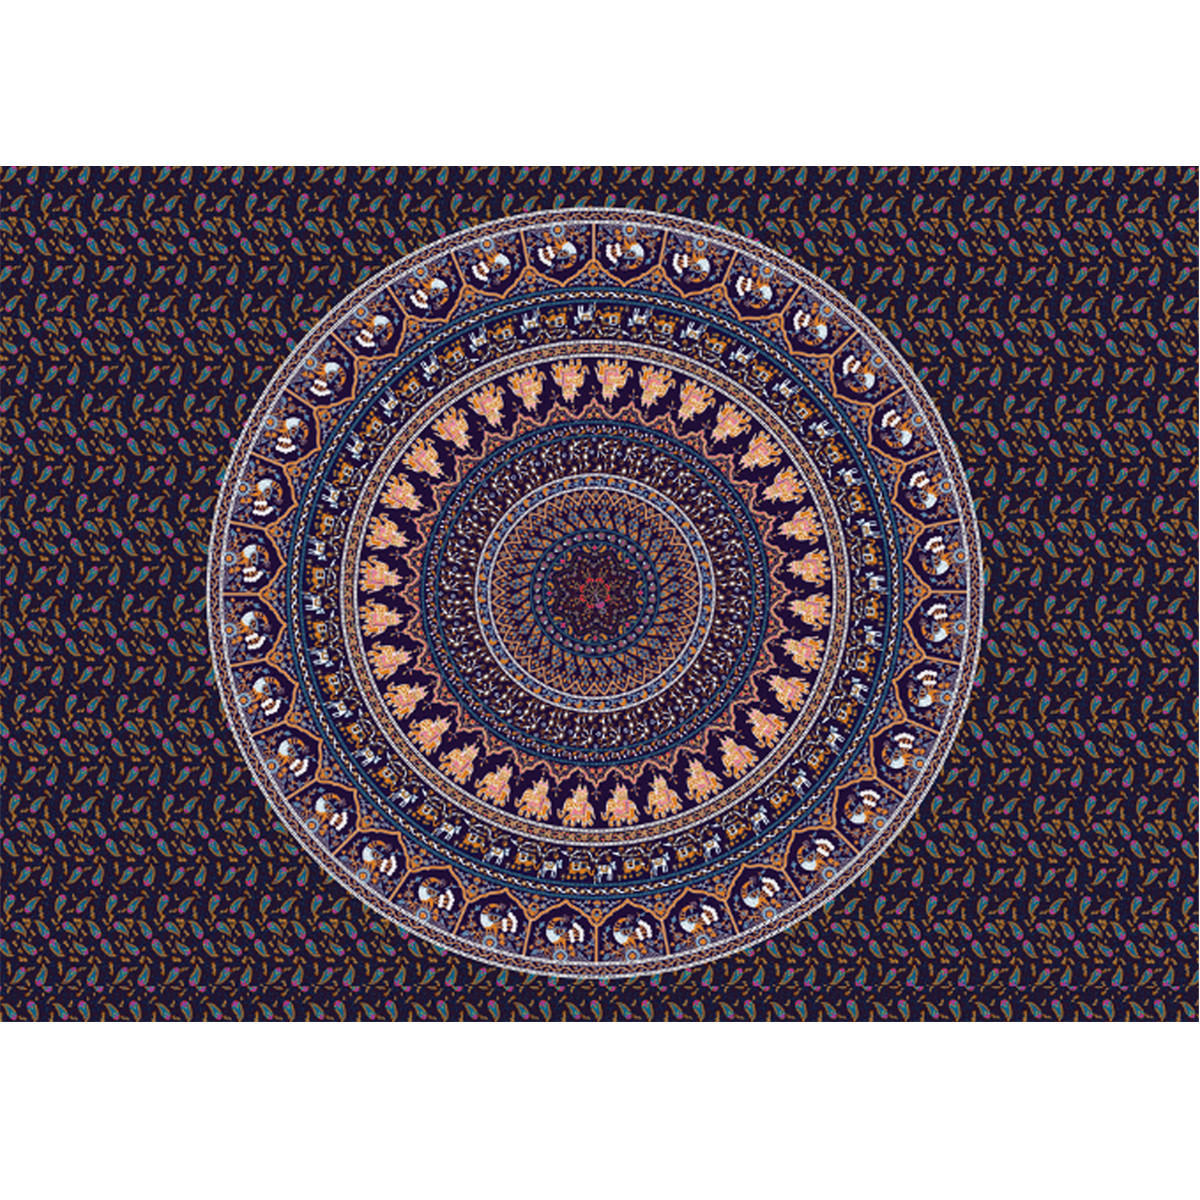 230x180cm200x150cm150x130cm-India-Mandala-Tapestry-Wall-Hanging-Decor-Wall-Cloth-Tapestries-Sandy-Be-1696997-4